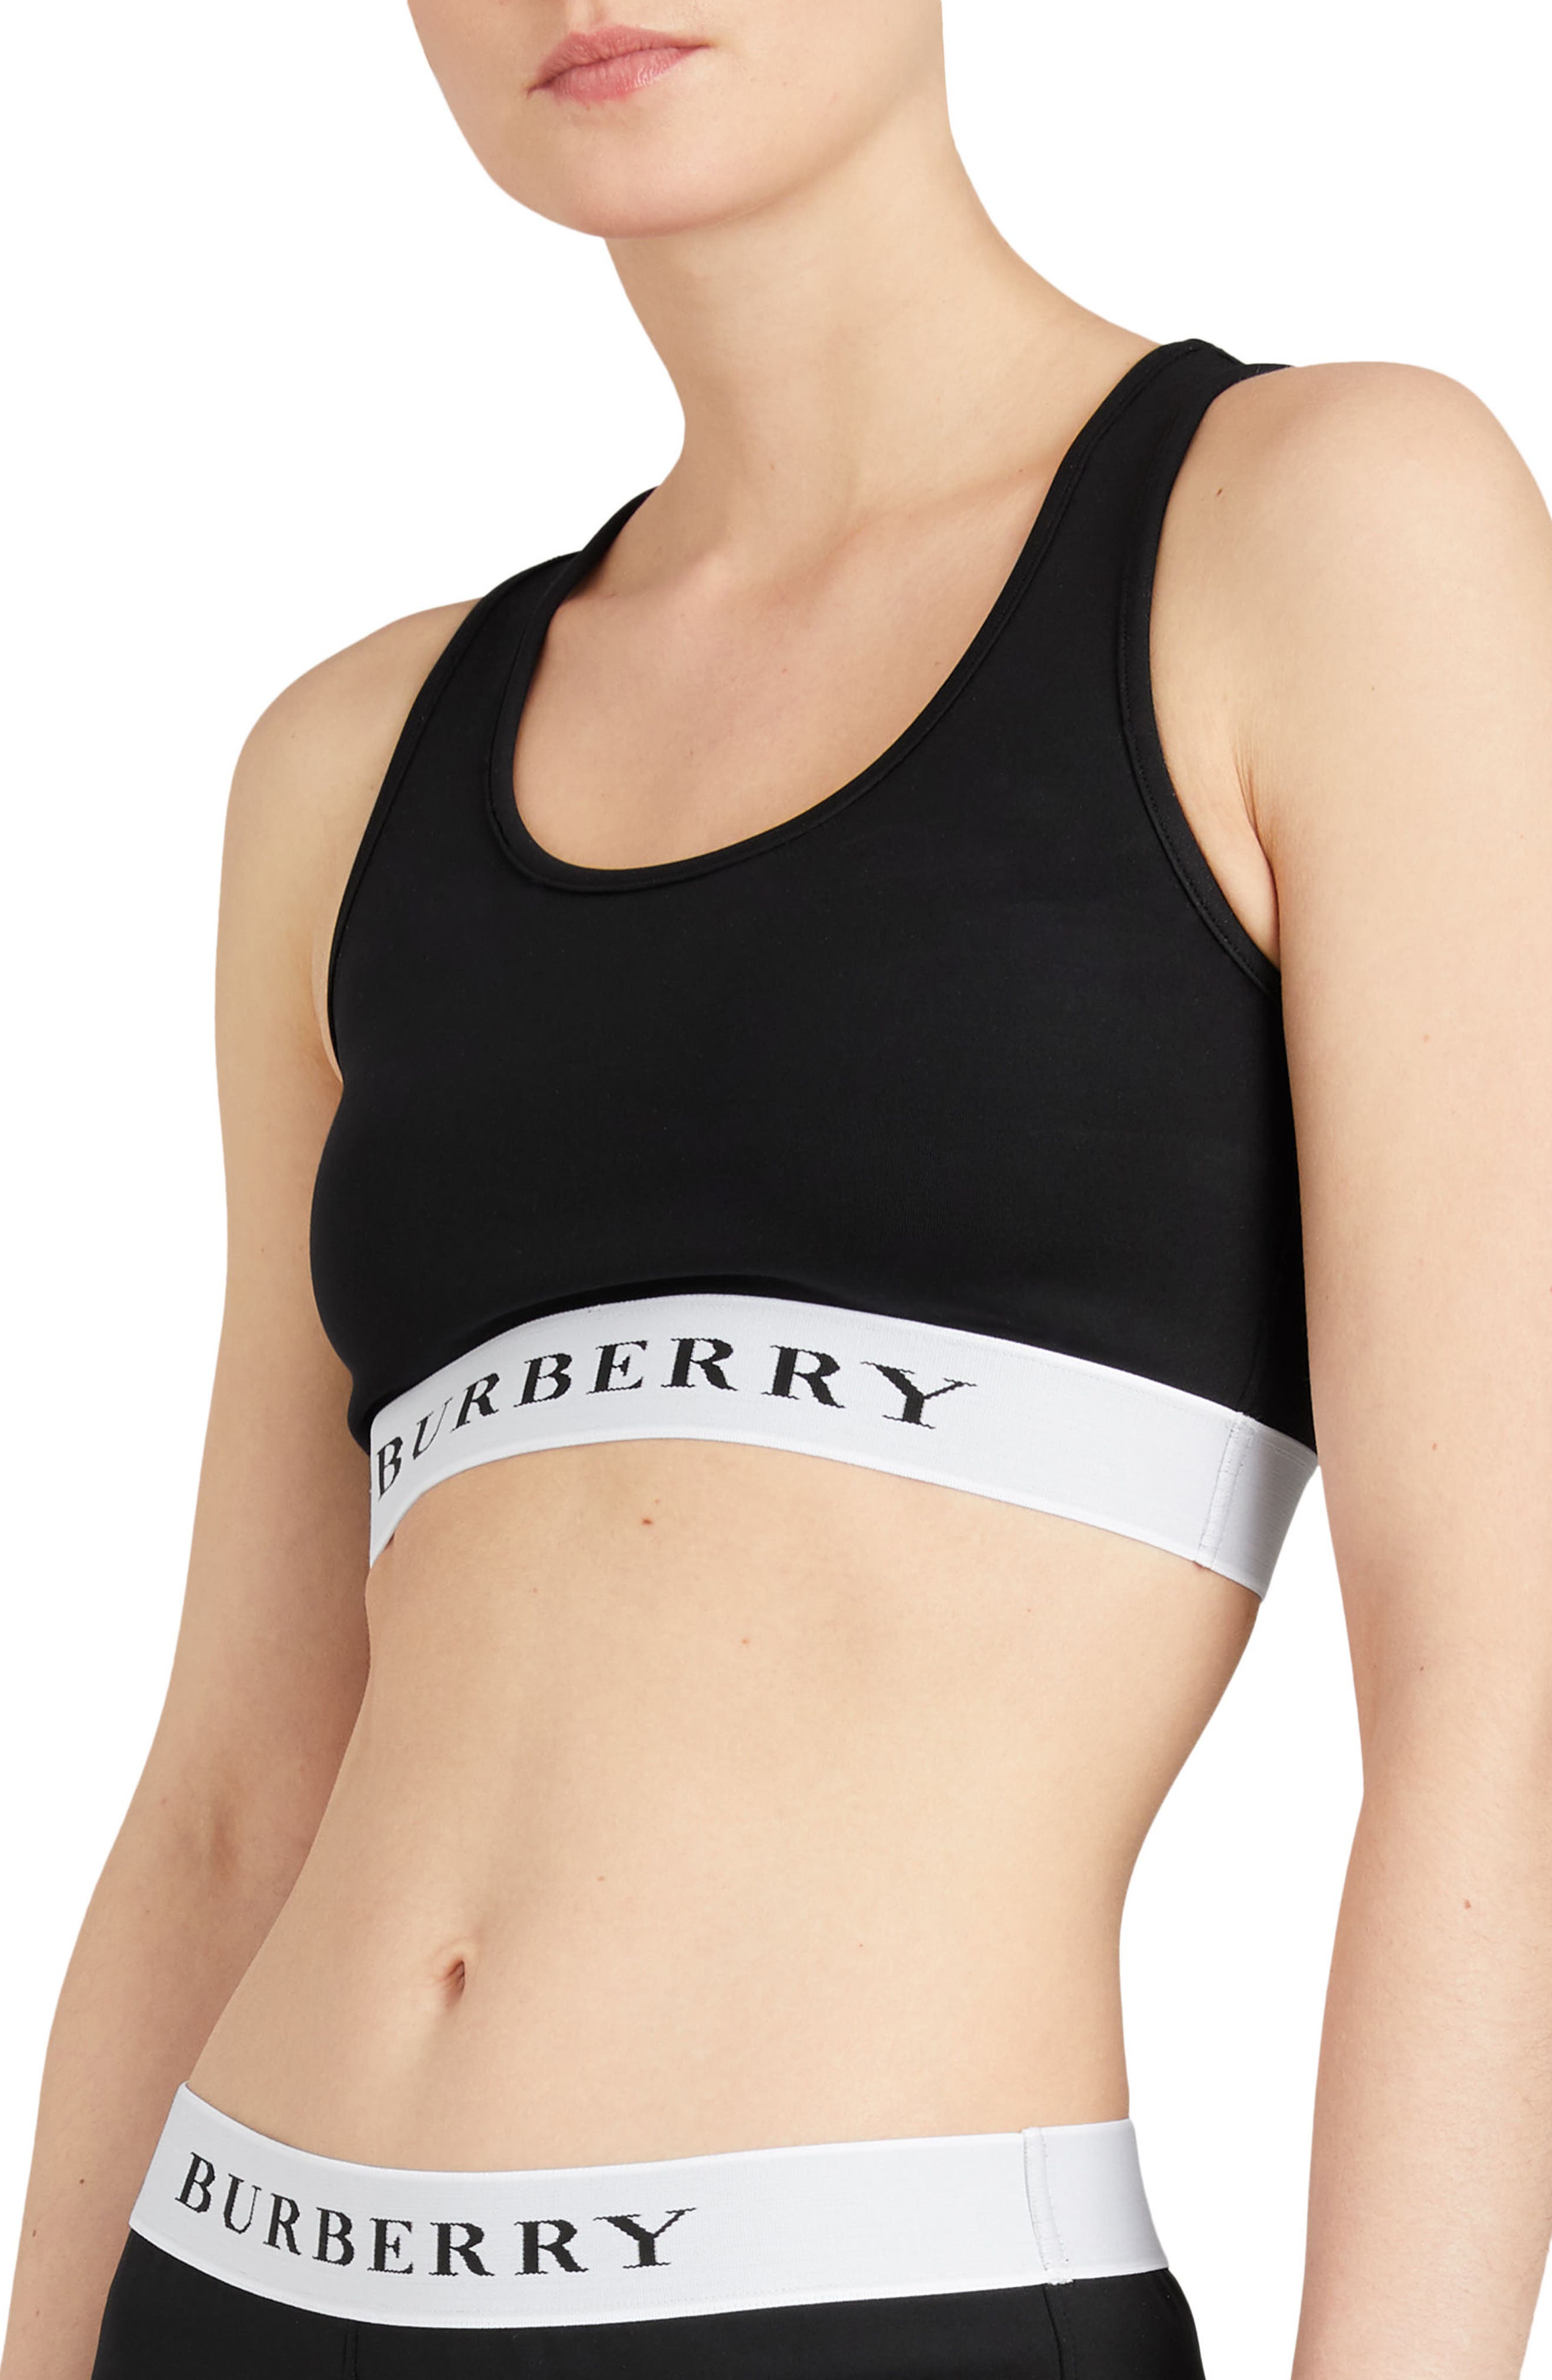 burberry sports bra and leggings